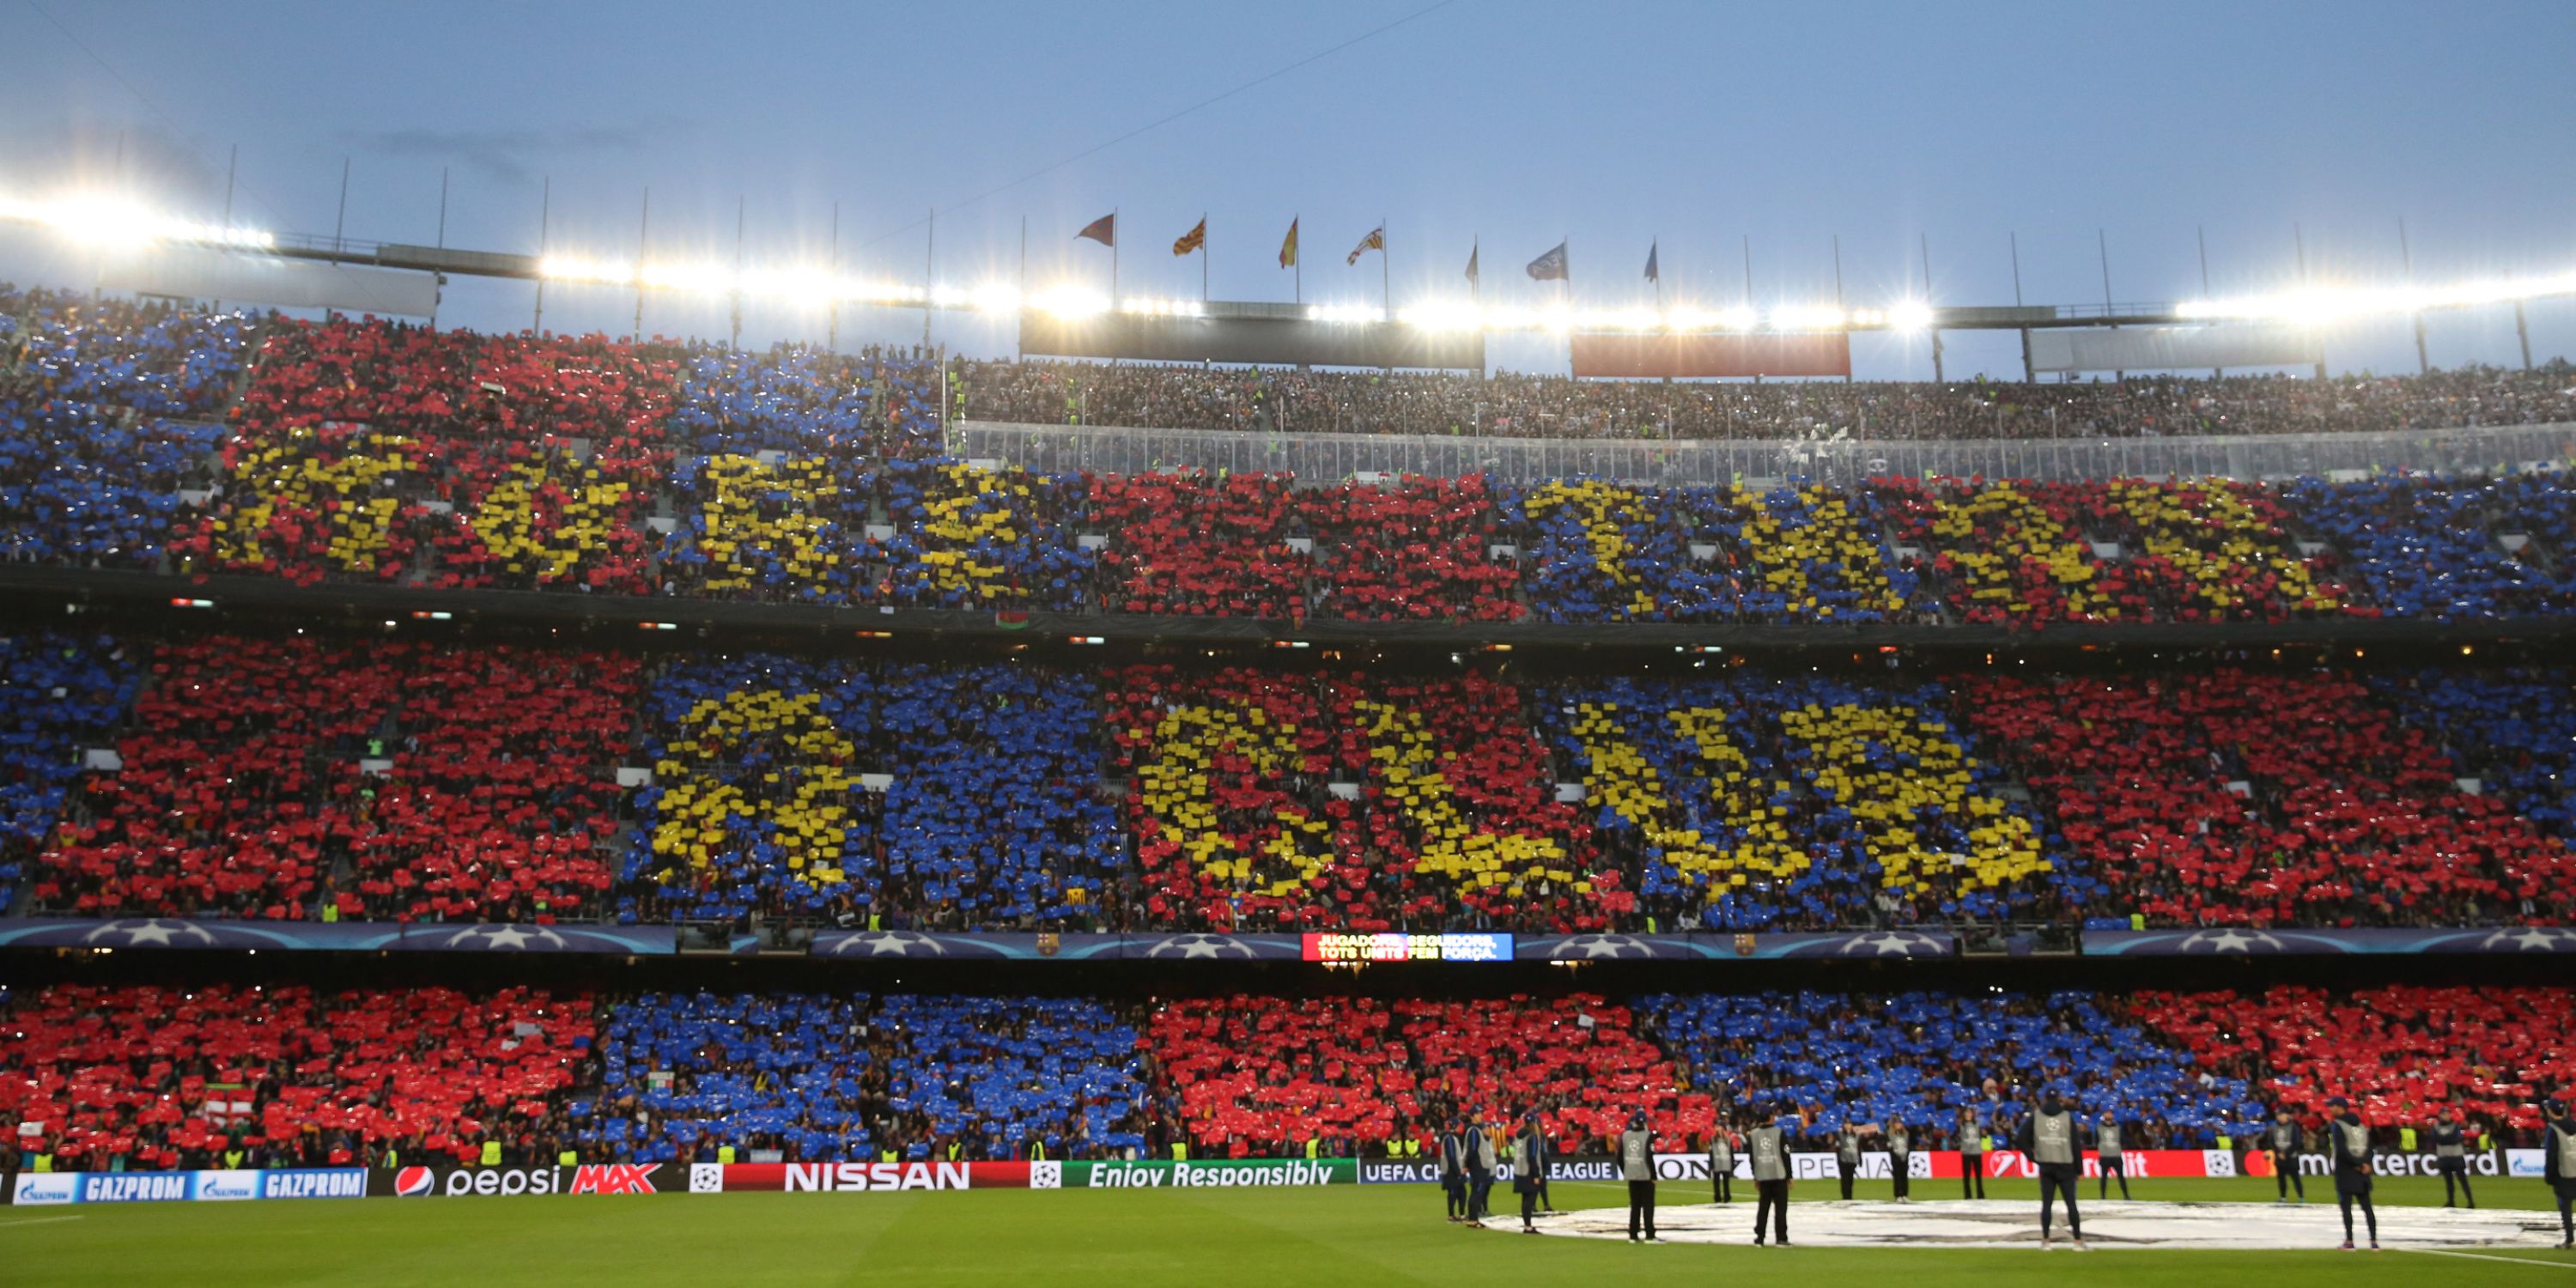 Barcelona fans produce a giant mosaic